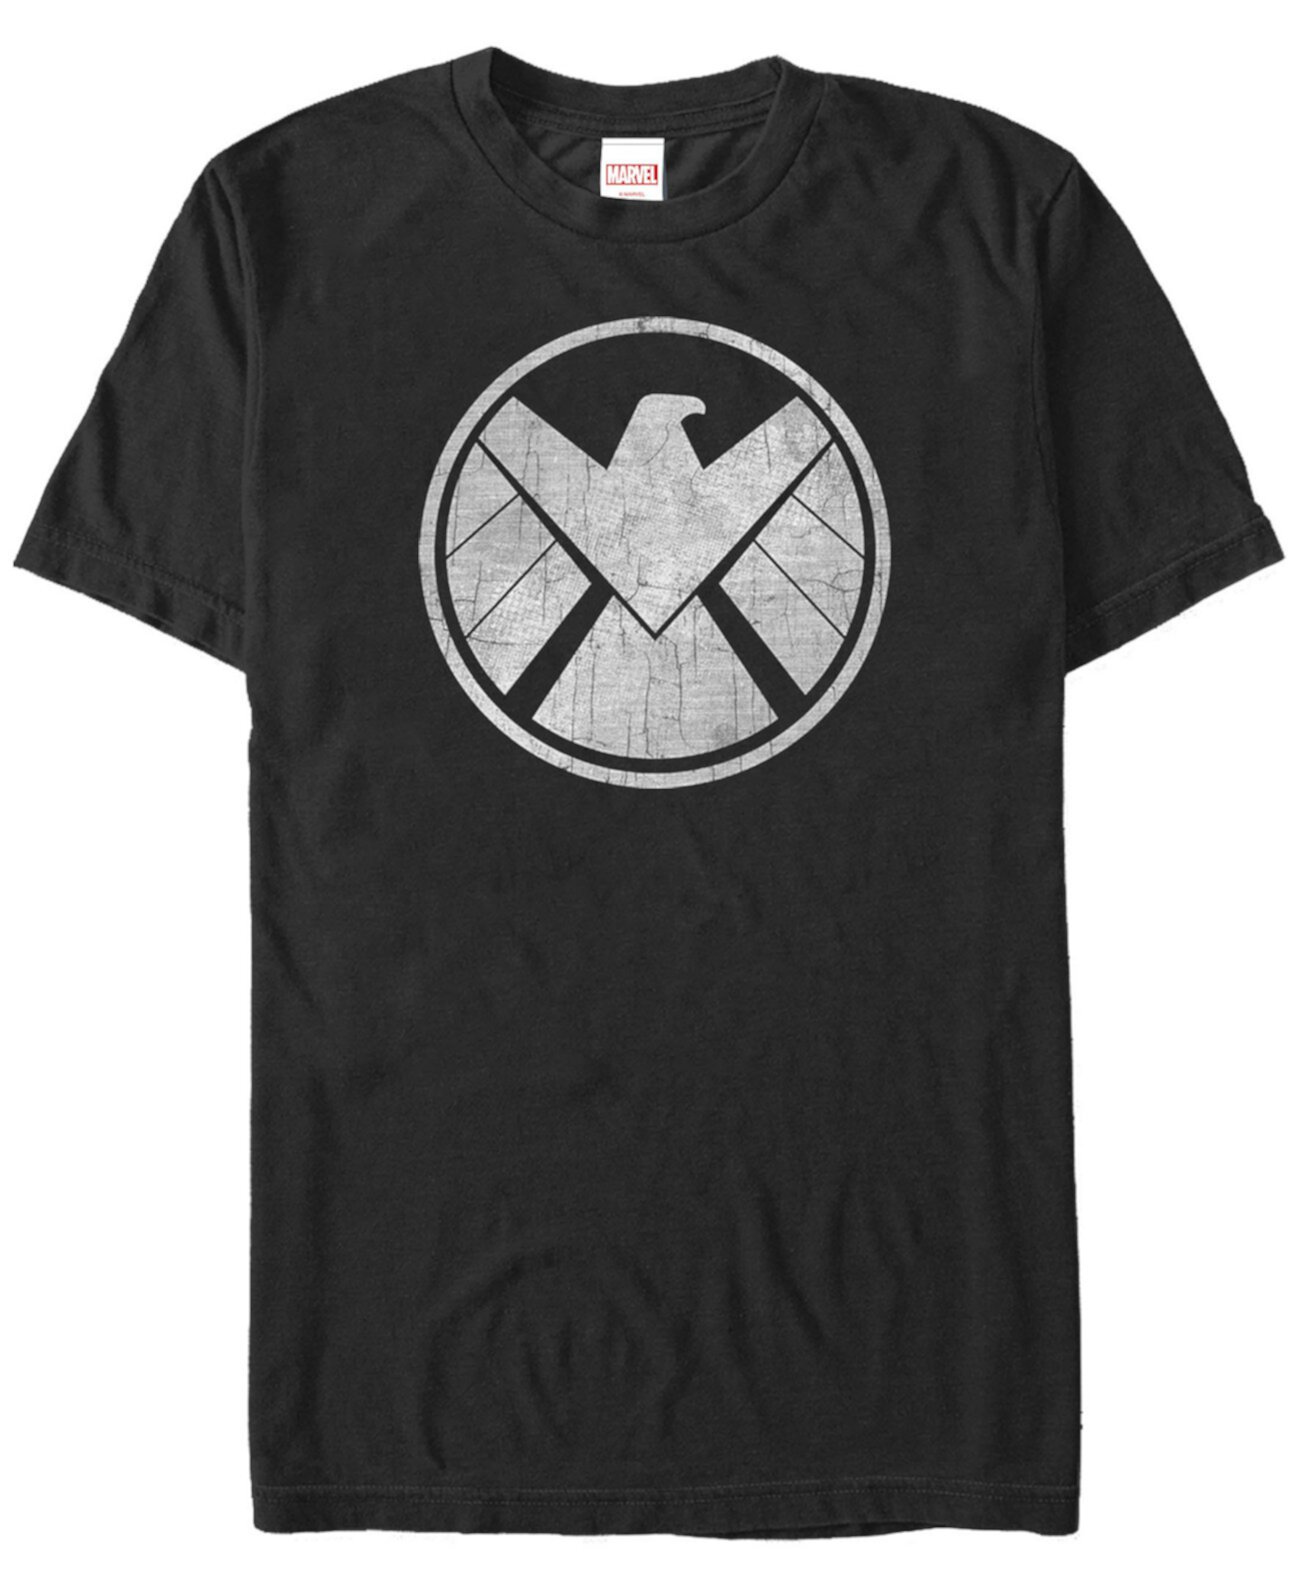 T shield. Футболка Марвел. Футболка Marvel мужская. Футболка Мстители финал. Марвел футболка с щитом.